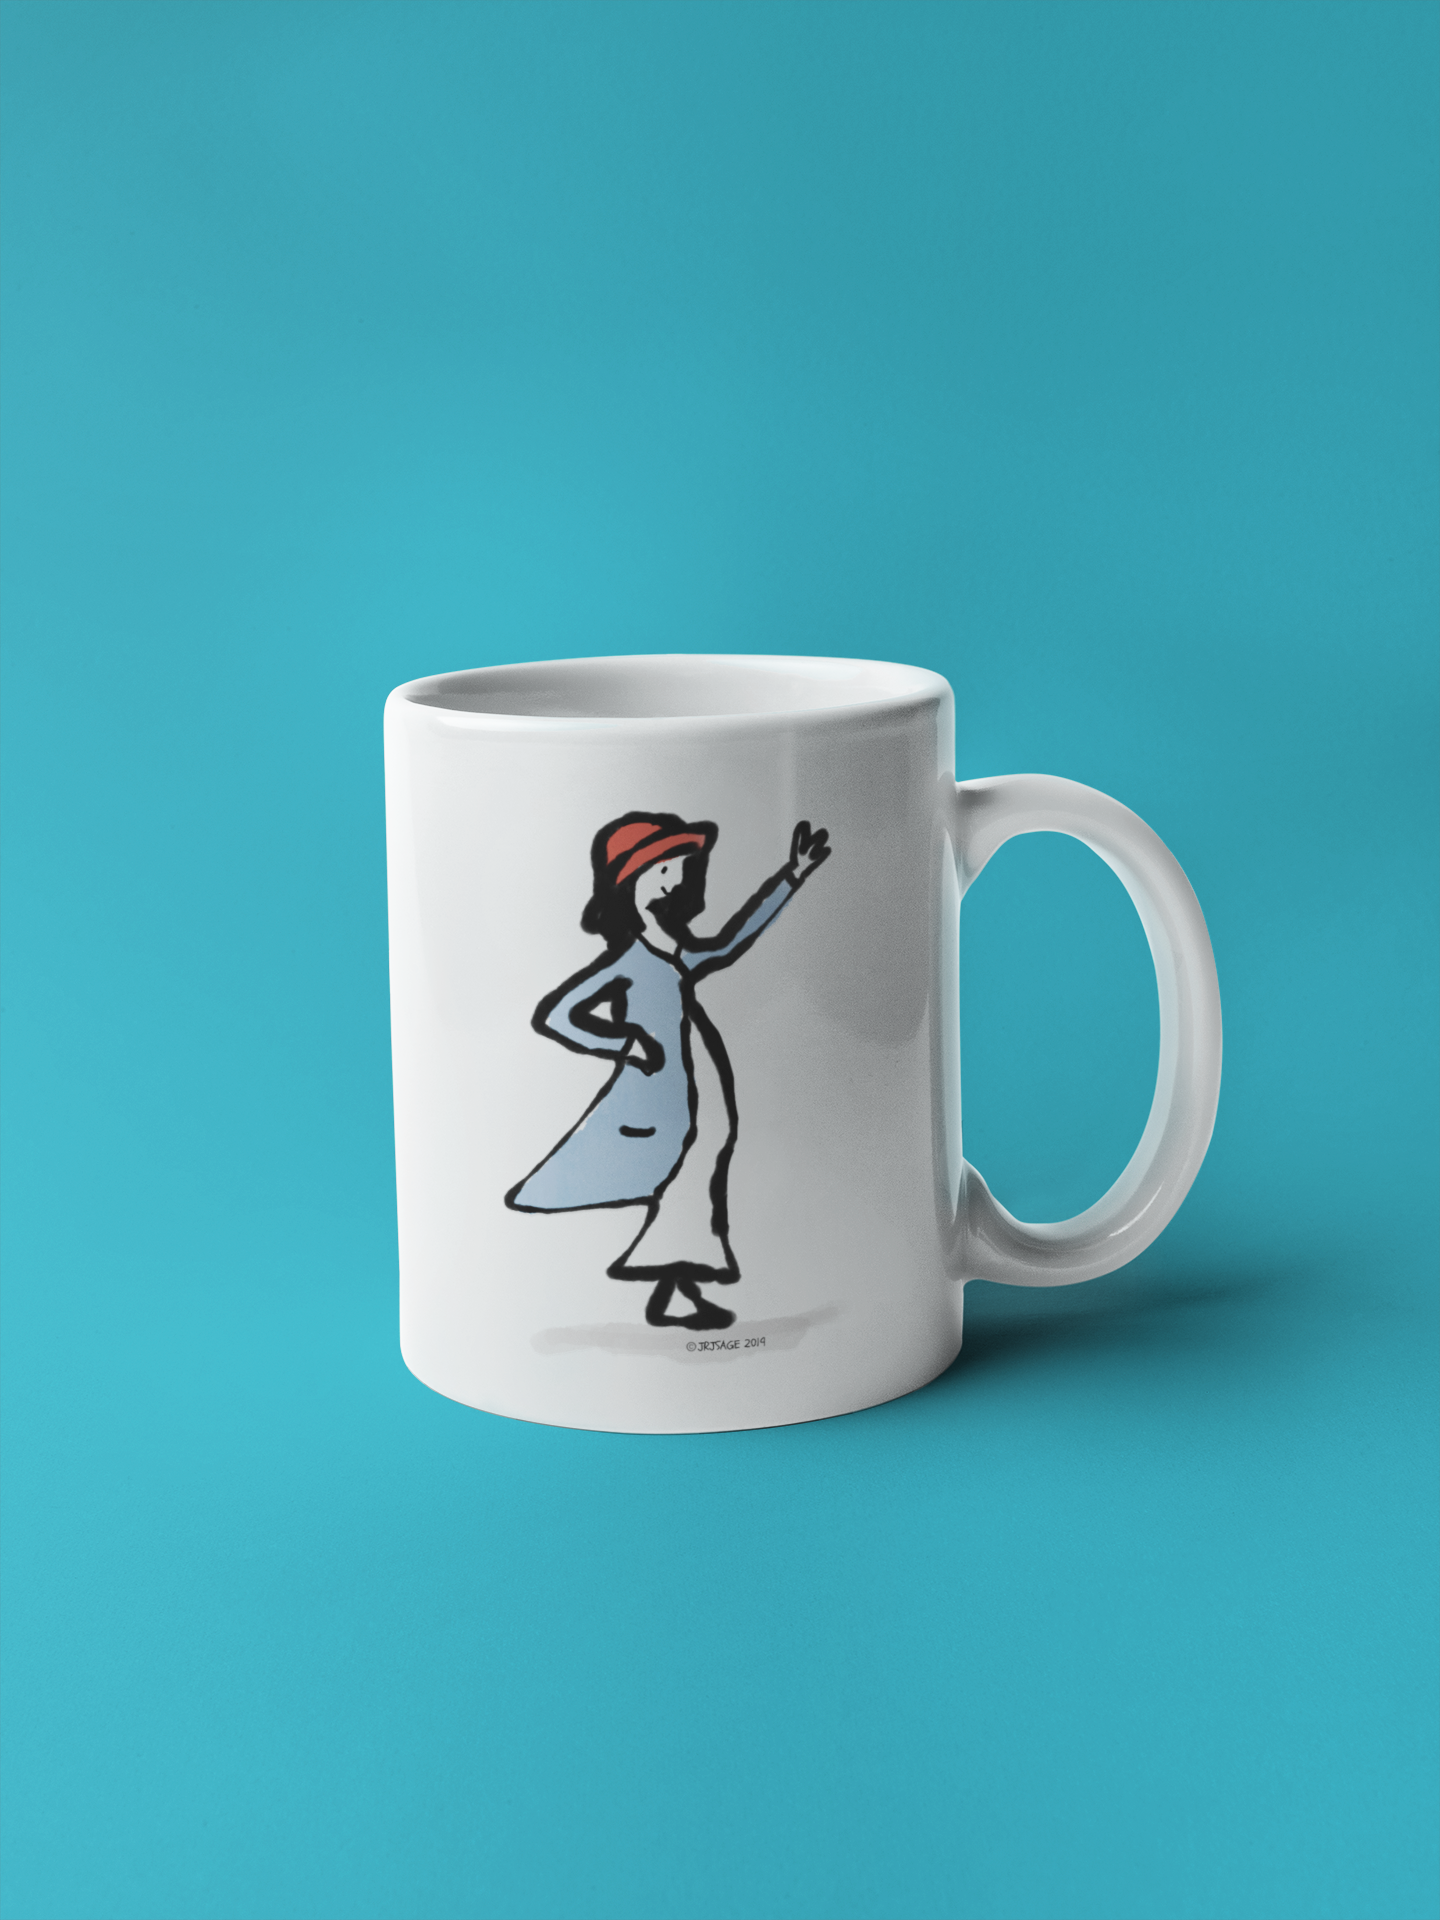 Waving Girl mug design - Original illustrated waving girl coffee mugs by Hector and Bone